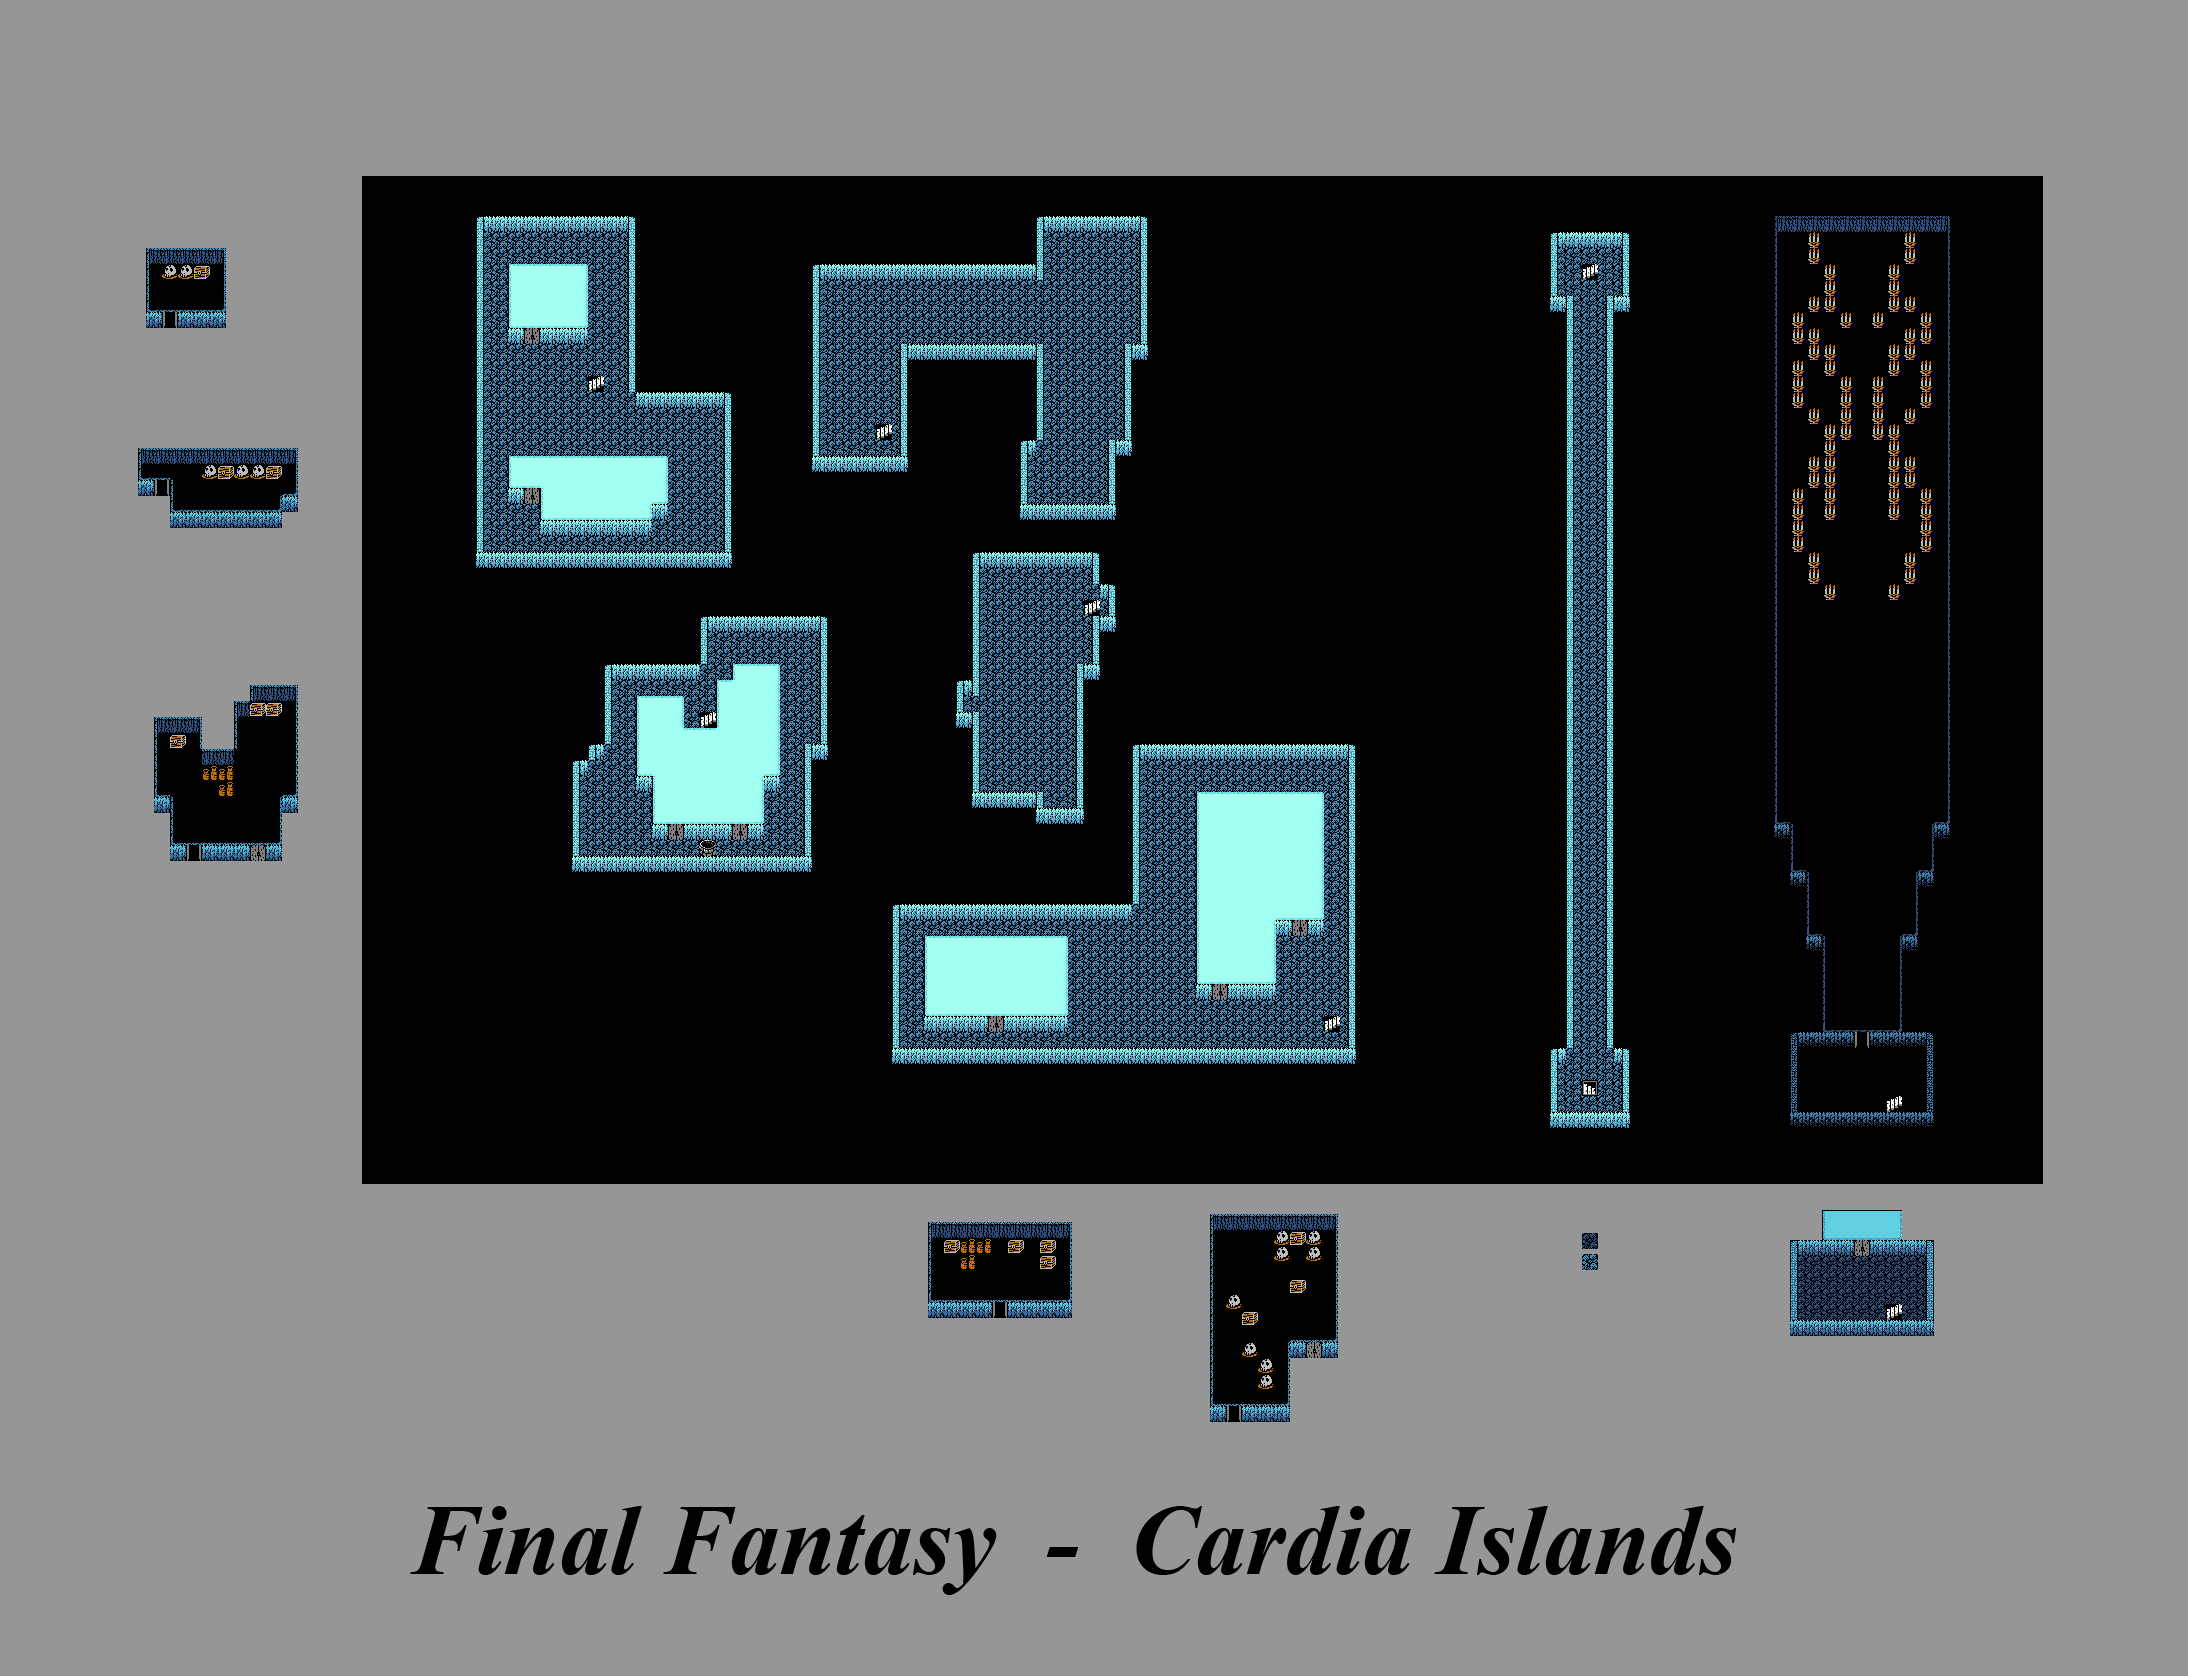 Final Fantasy - Cardia Islands